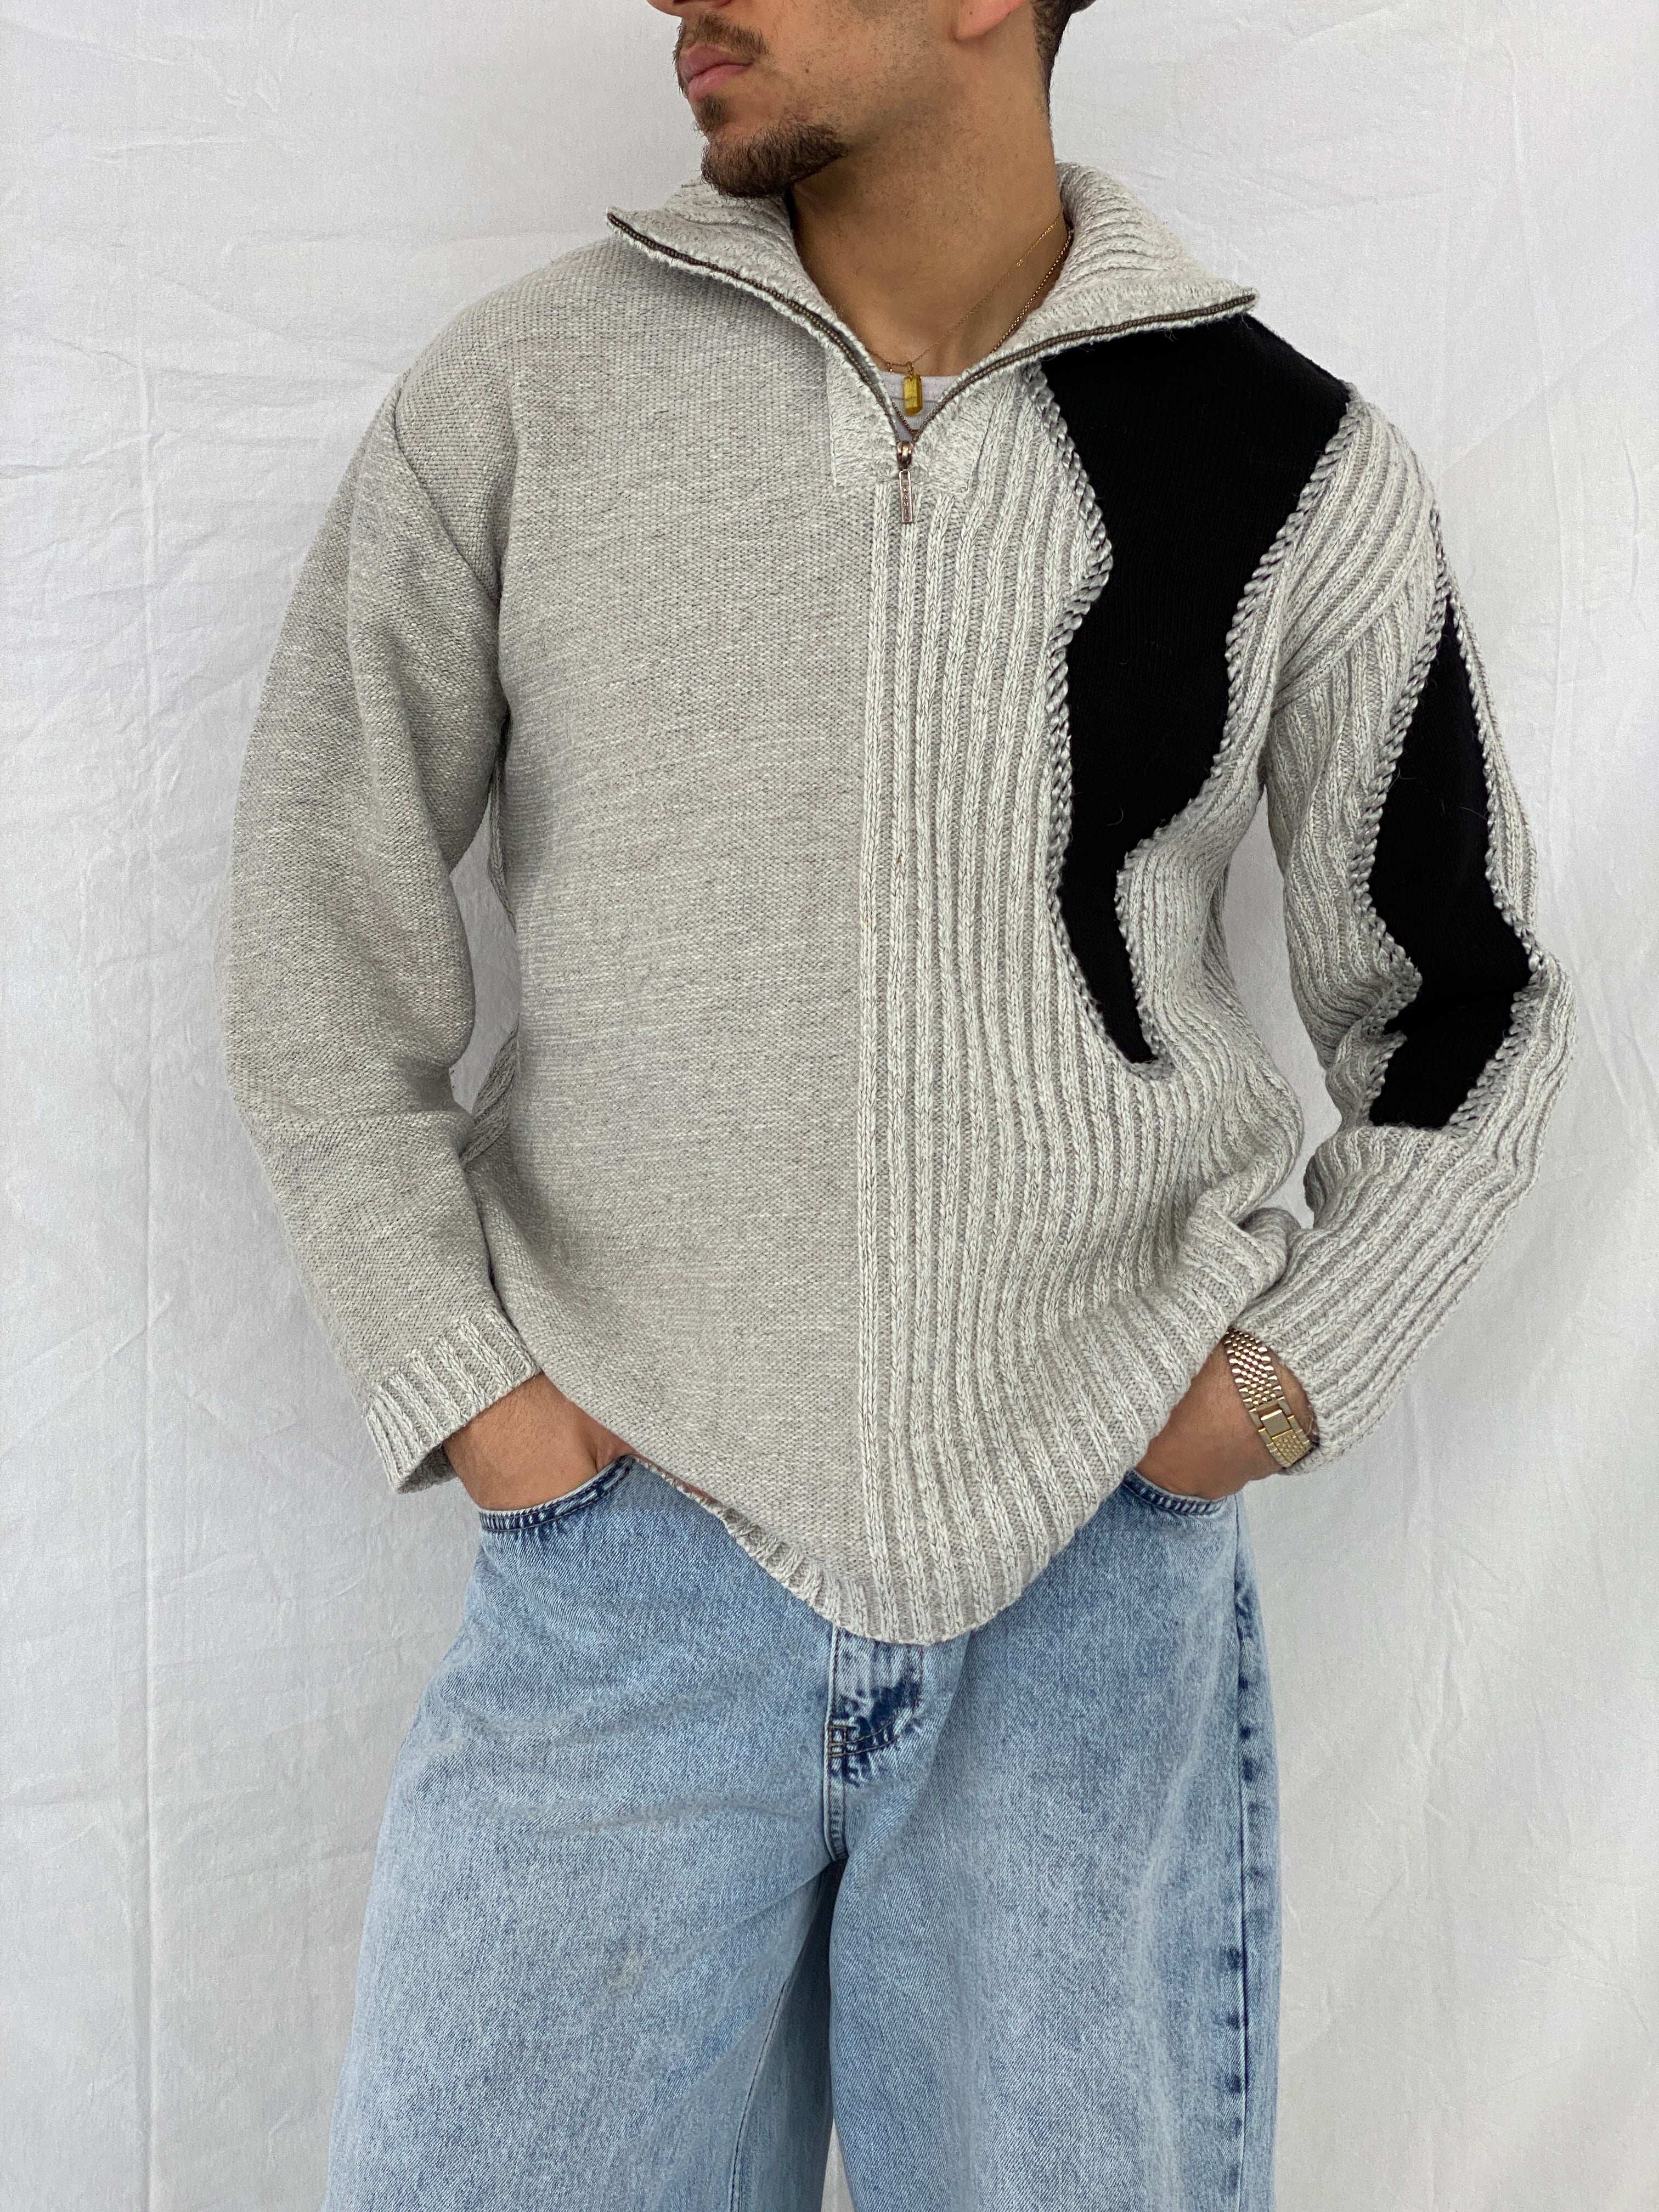 Vintage Kamen Grey And Black Knitted Sweater - Size L